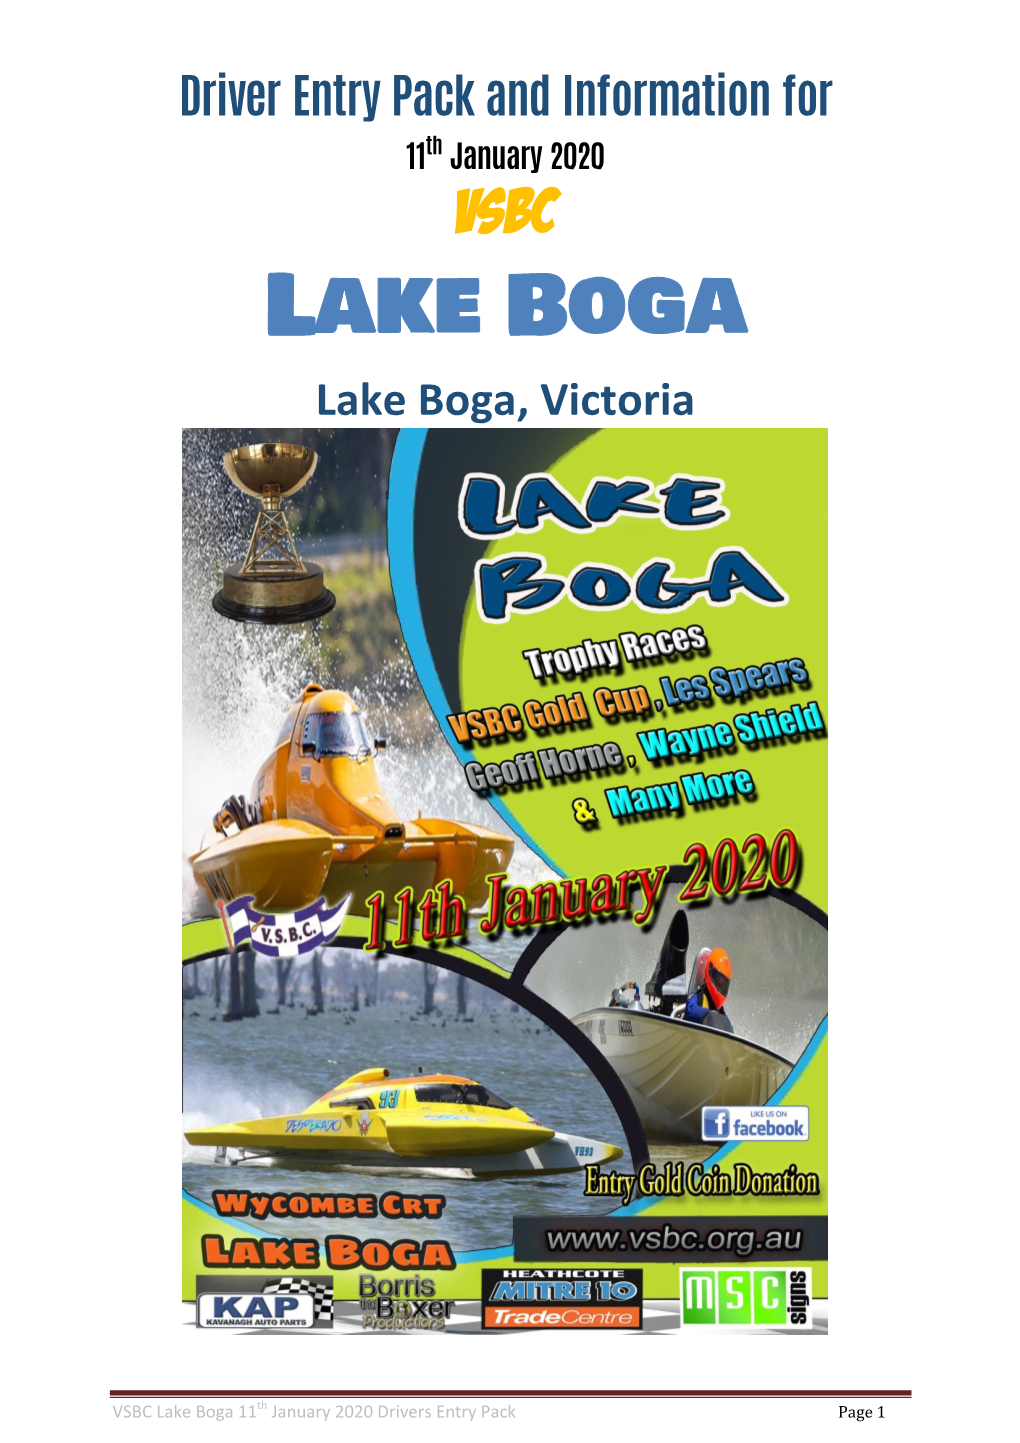 Lake Boga Lake Boga, Victoria